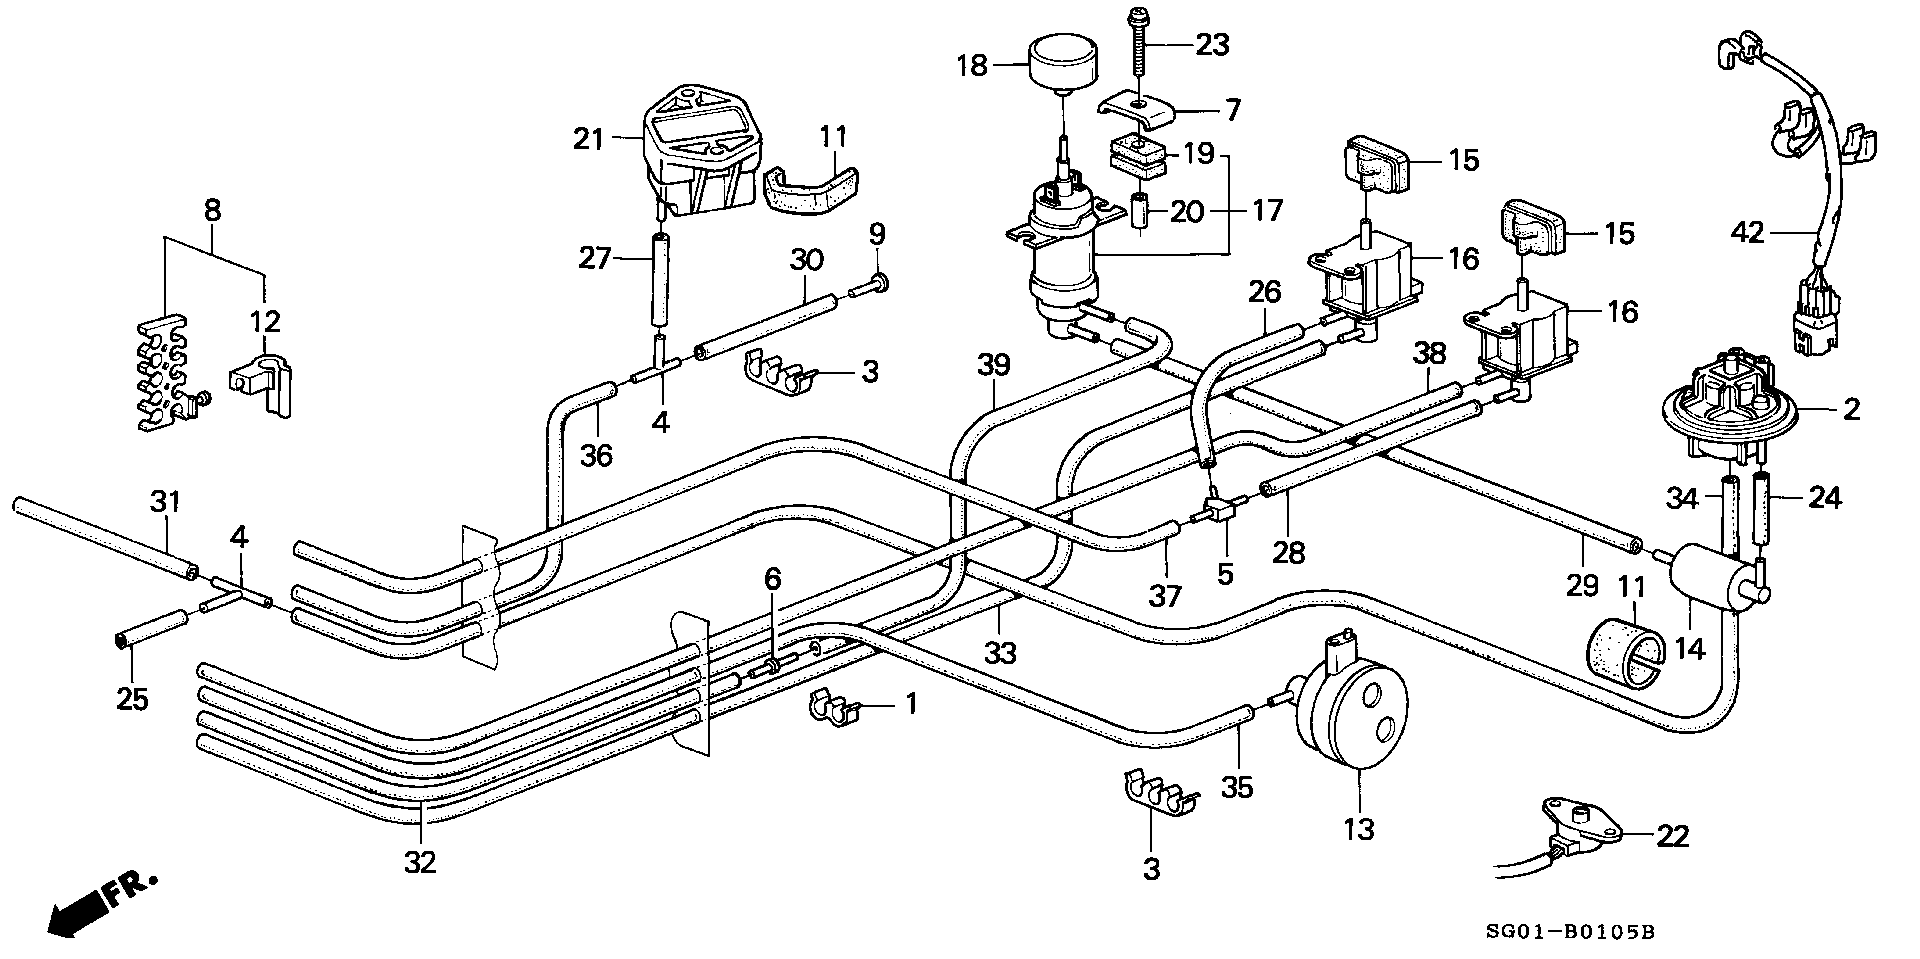 CONTROL BOX TUBING (KA3:101,110,120)